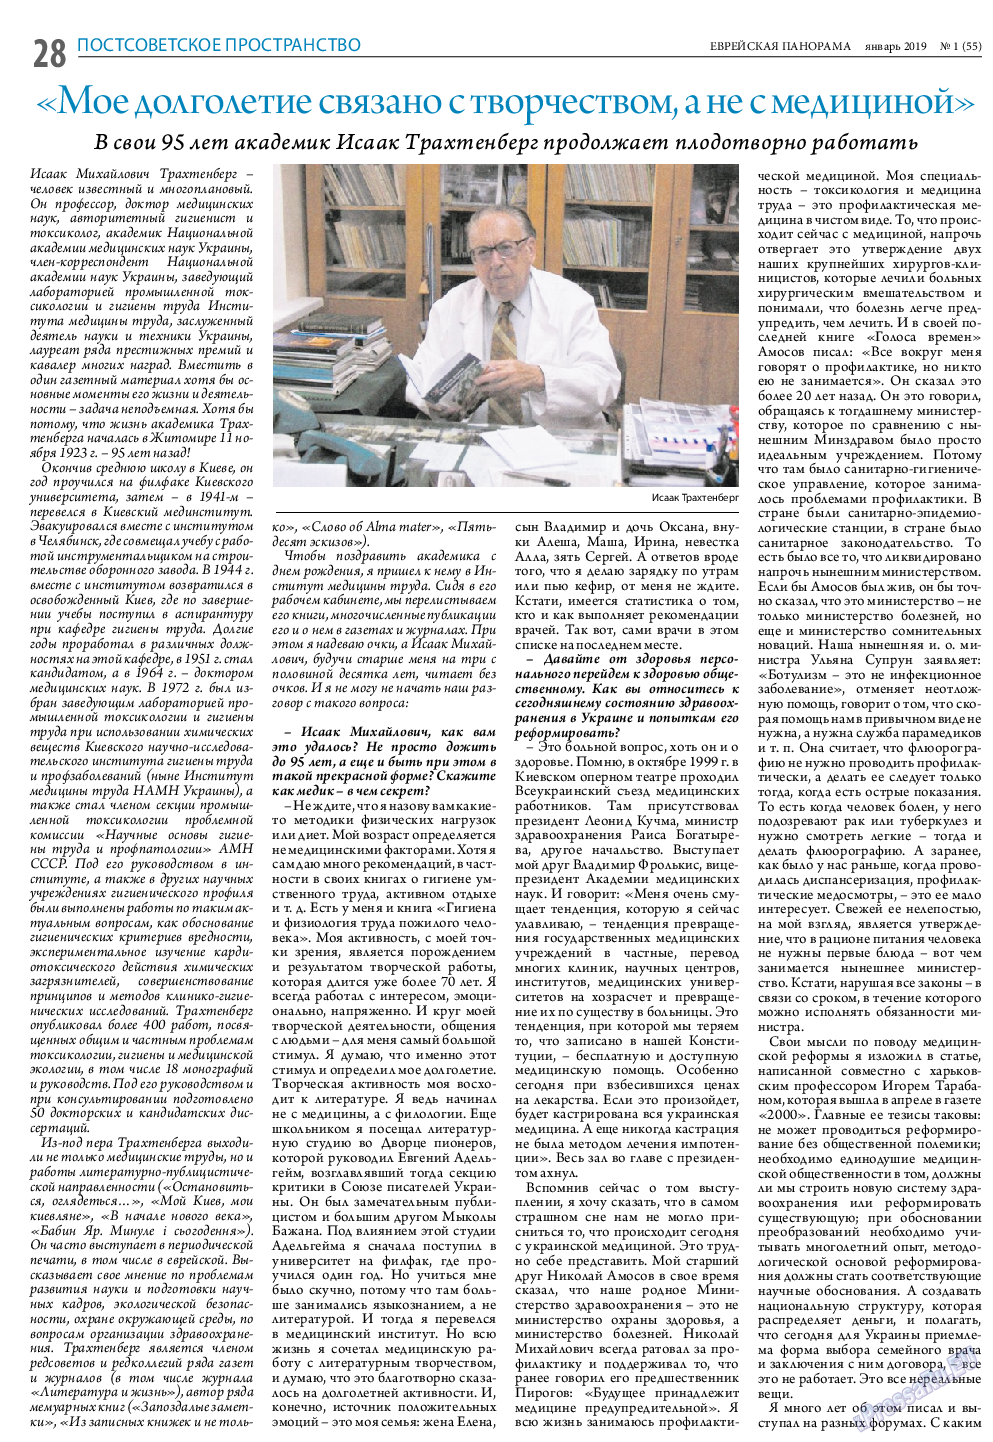 Еврейская панорама, газета. 2019 №1 стр.28